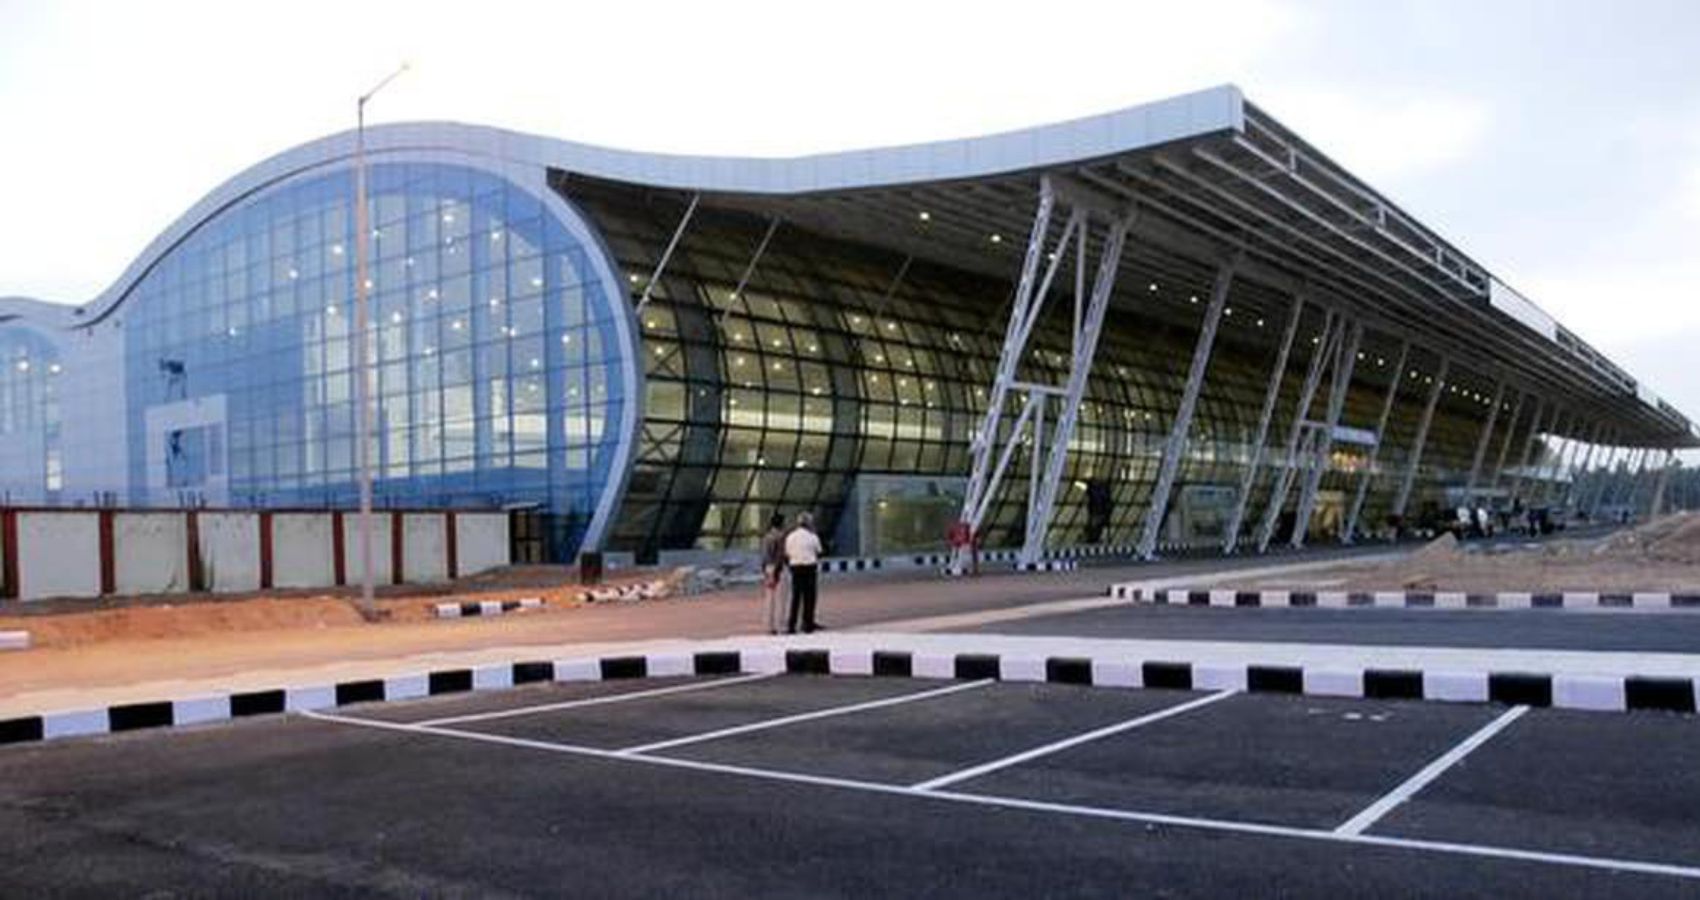 With India’s Top Court Nod, Kerala Government To Hand Over Thiruvananthapuram Airport To Adani